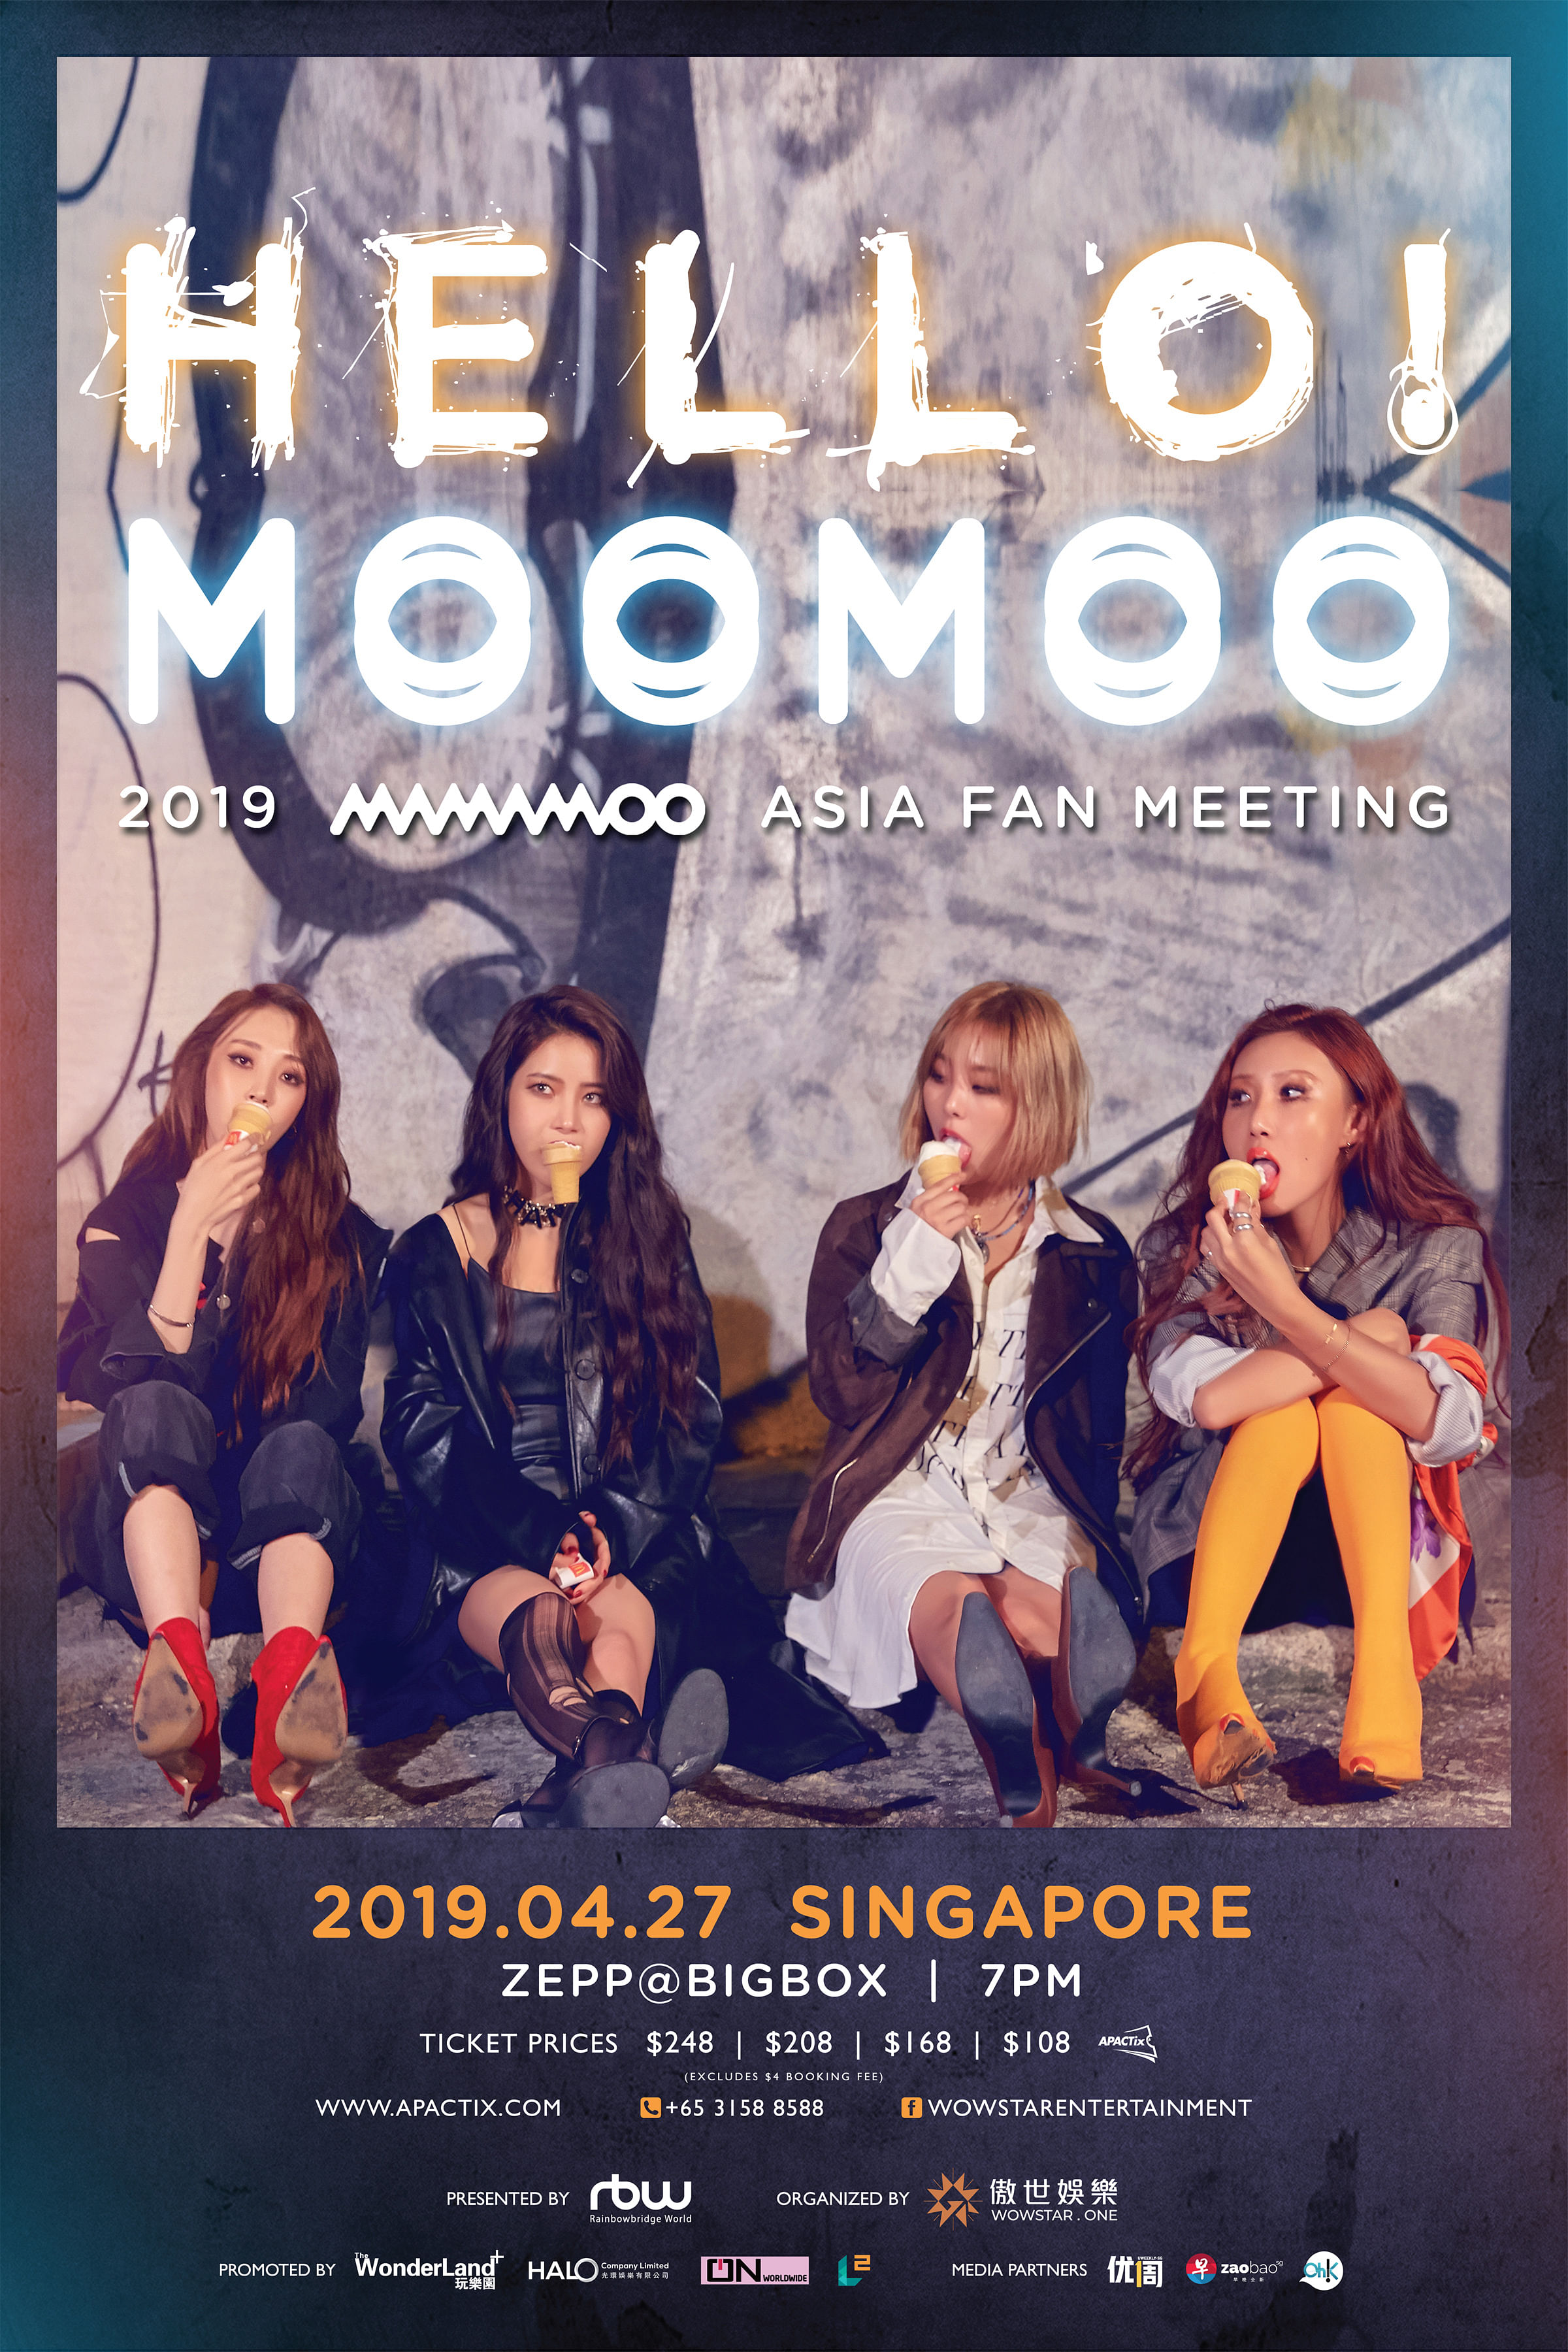 mamamoo-poster-singapore_1_Small.jpg